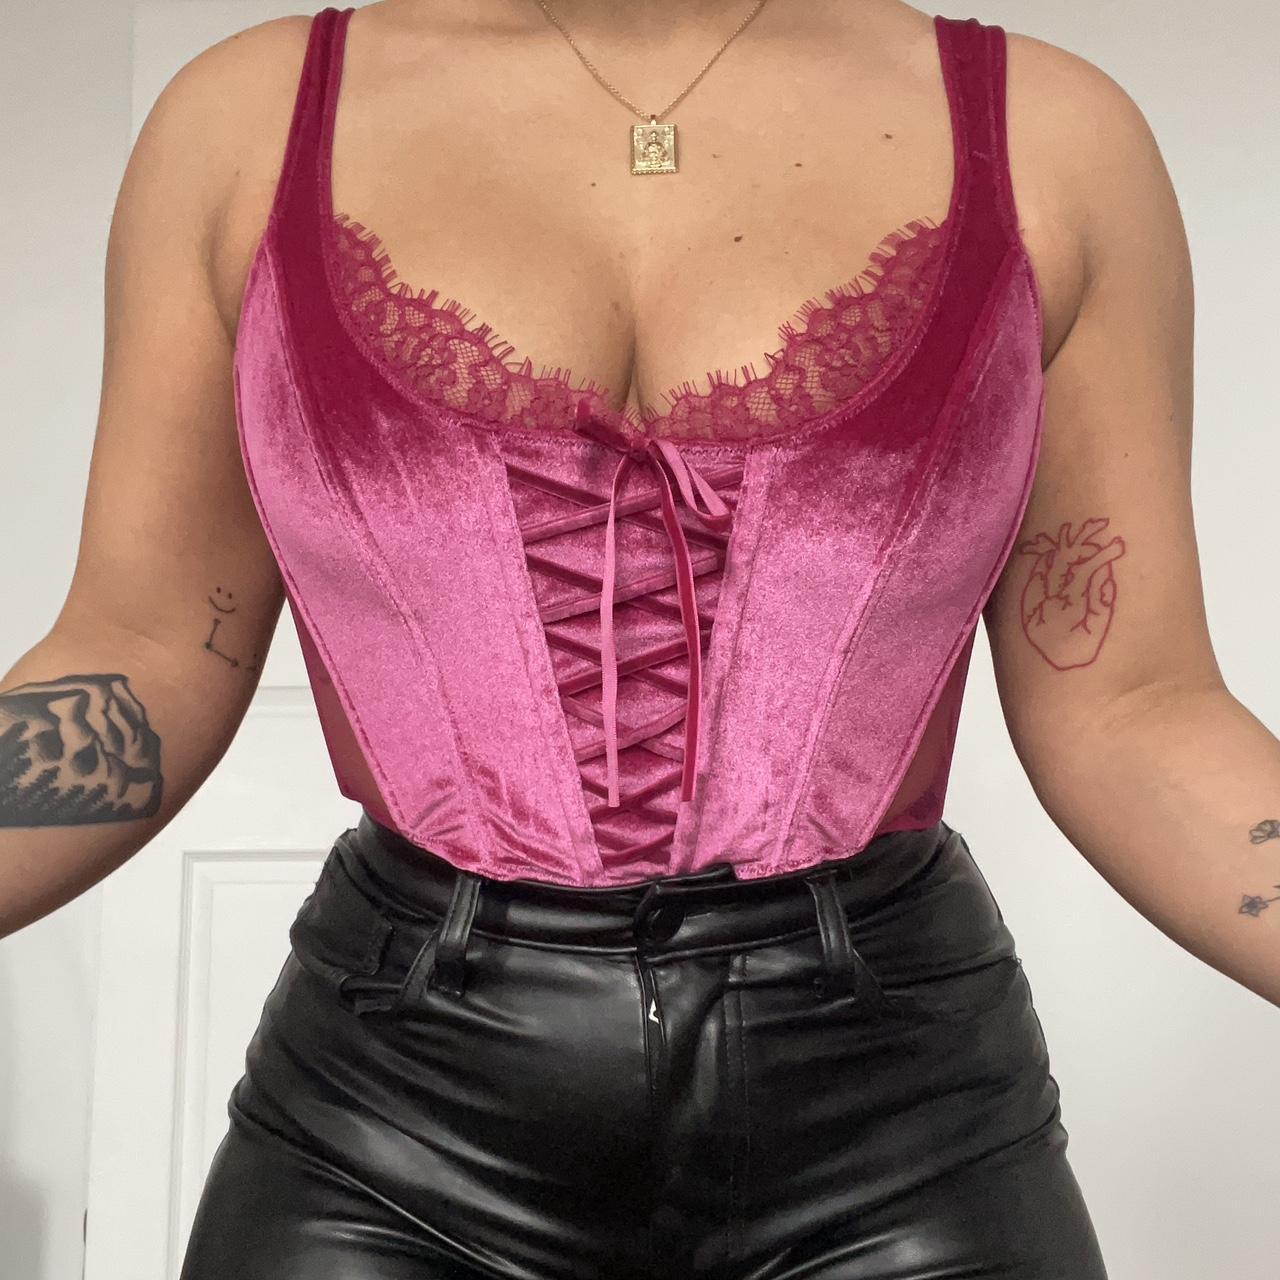 ADORABLE Victoria secret velvet corset 💗 okay so I